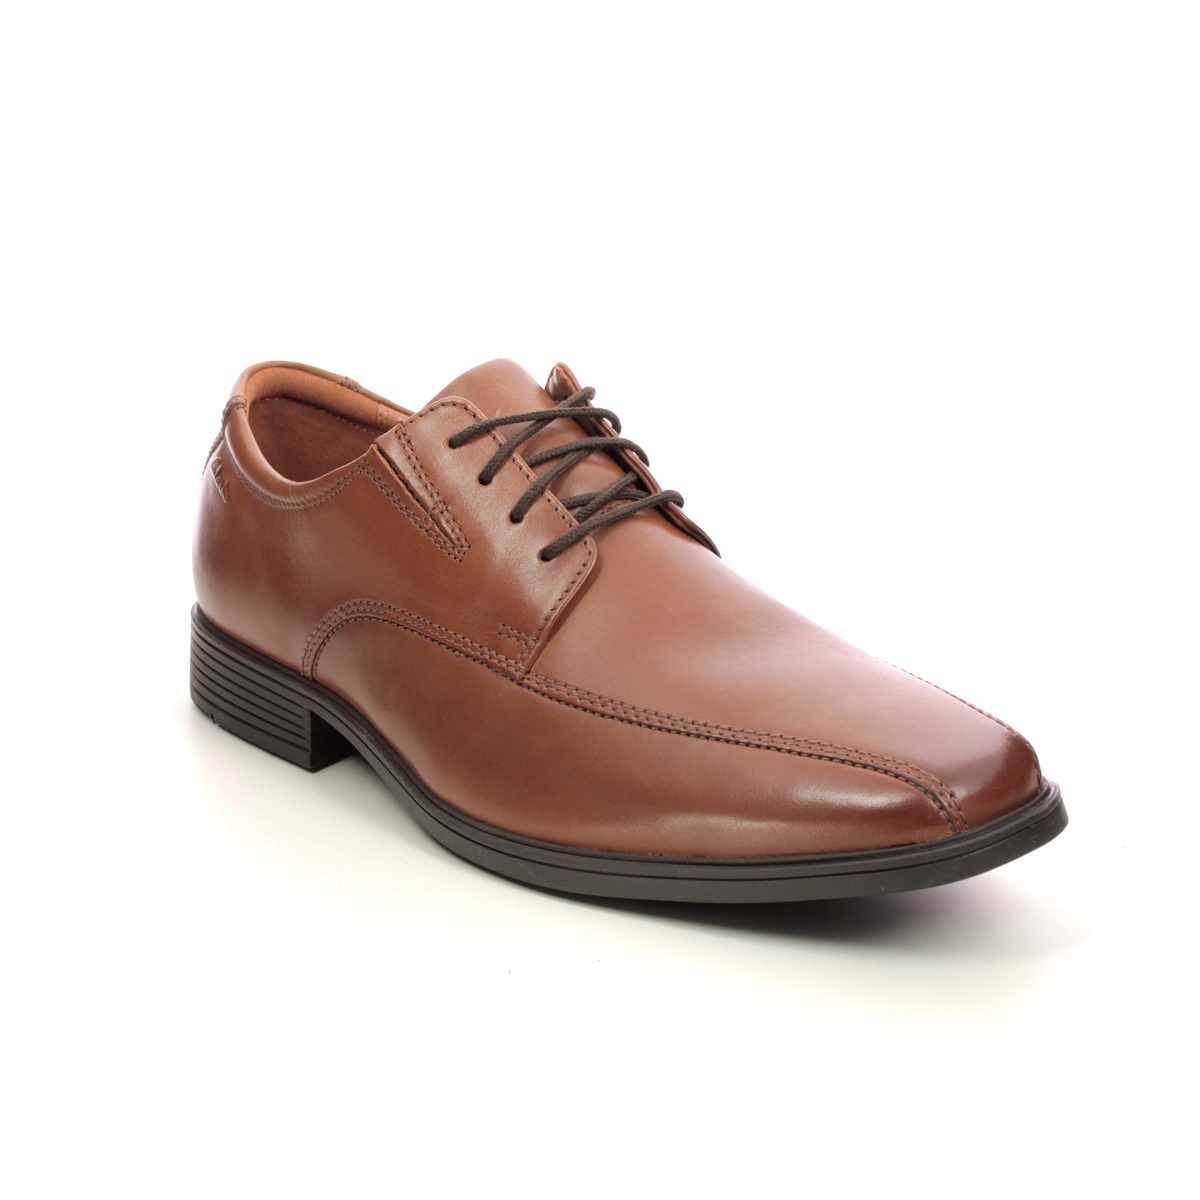 Clarks Tilden Walk Dark Tan Mens Formal Shoes 300958H In Size 10 In Plain Dark Tan H Width Fitting Extra Wide